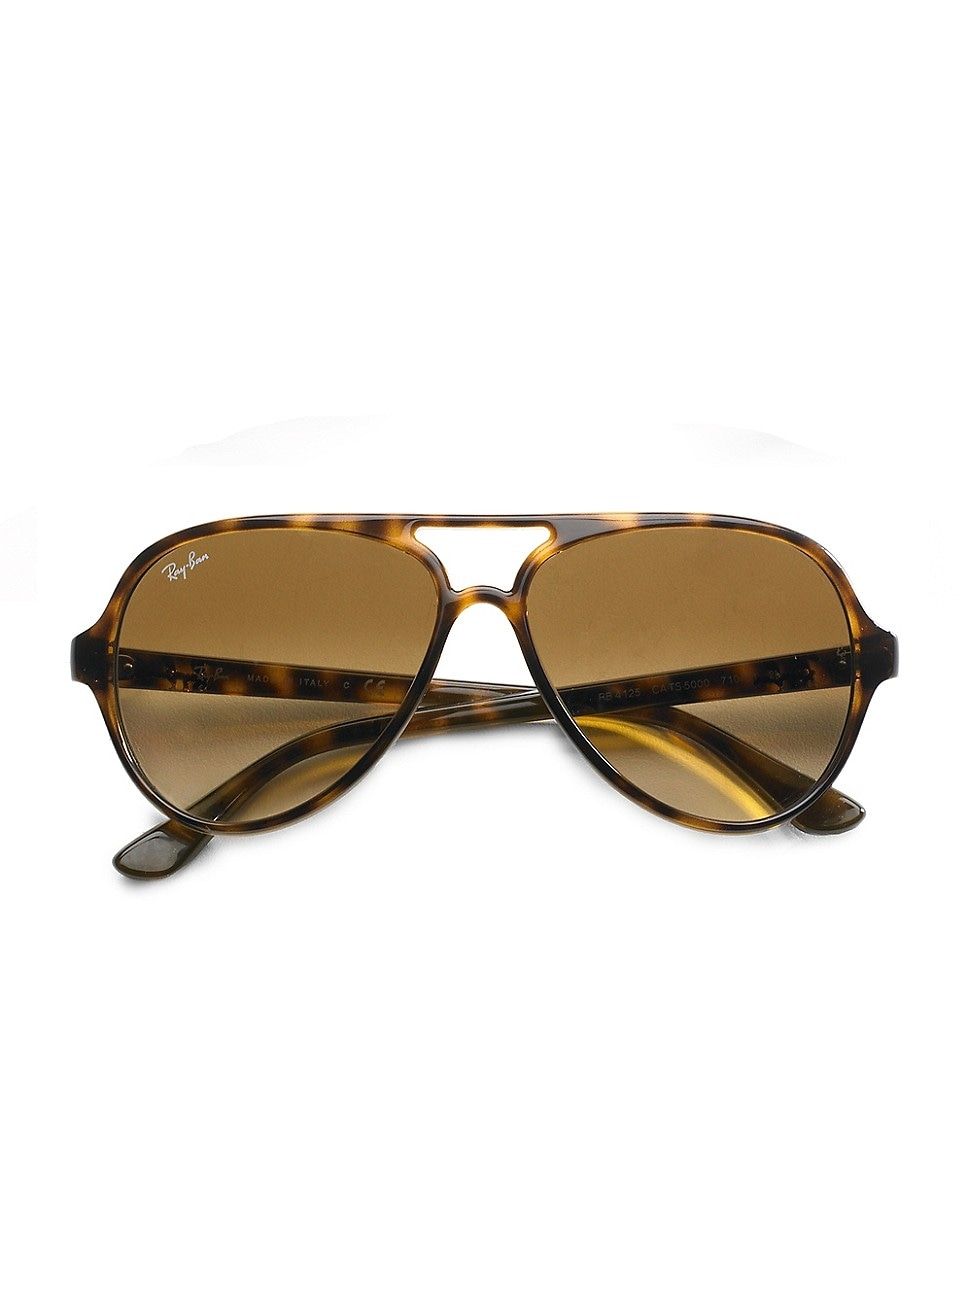 RB4125 Iconic Cats 5000 59MM Aviator Sunglasses | Saks Fifth Avenue